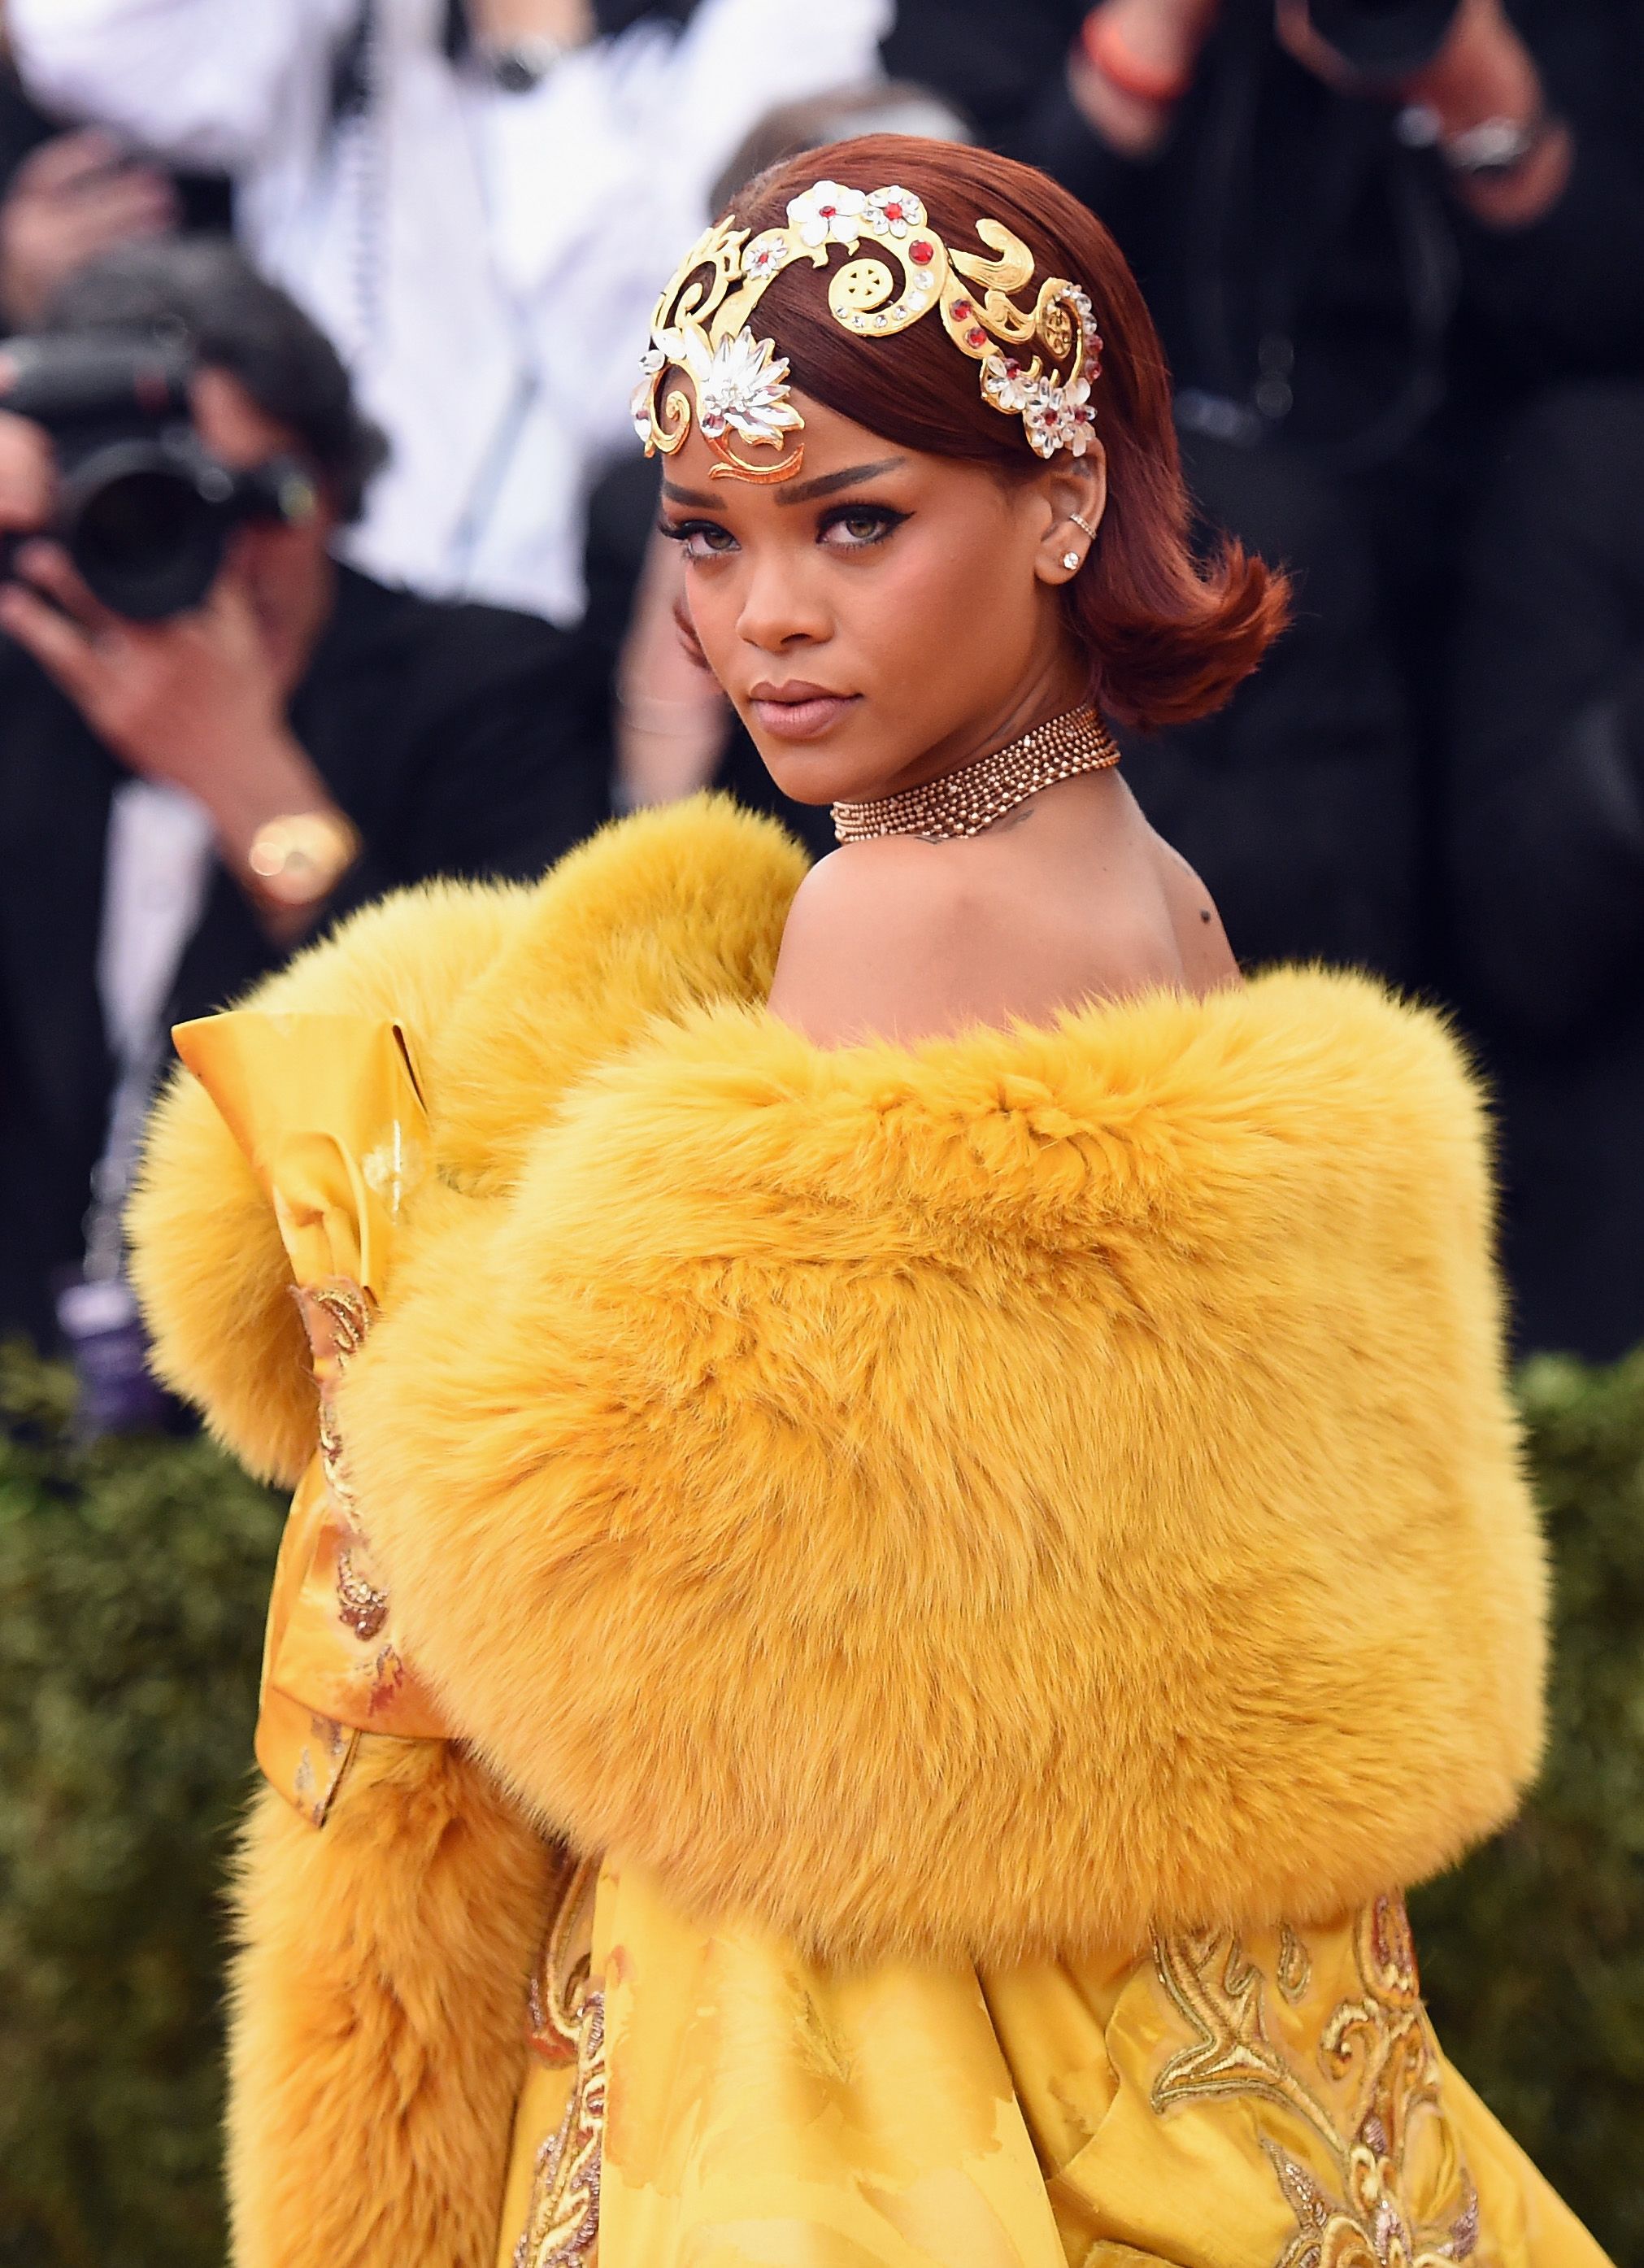 Rihanna Is Now a Billionaire: Inside Her Empire – NBC10 Philadelphia